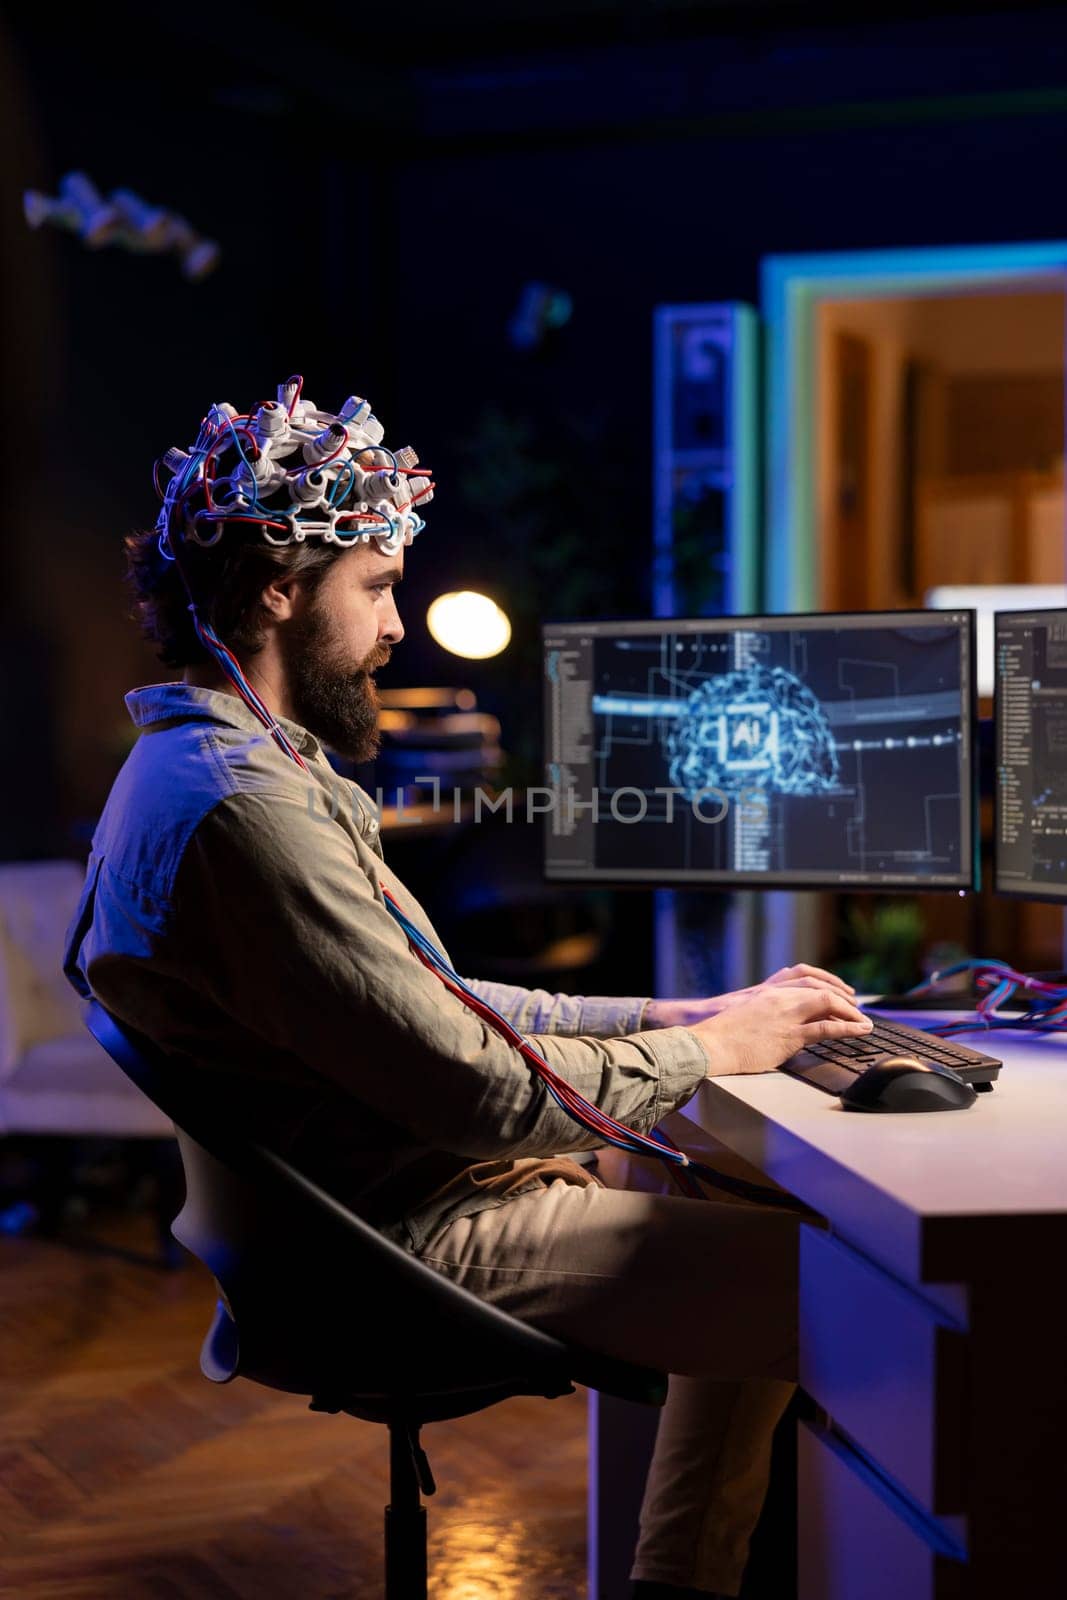 Crazy scientist using neuroscientific tech to gain superintelligence by DCStudio